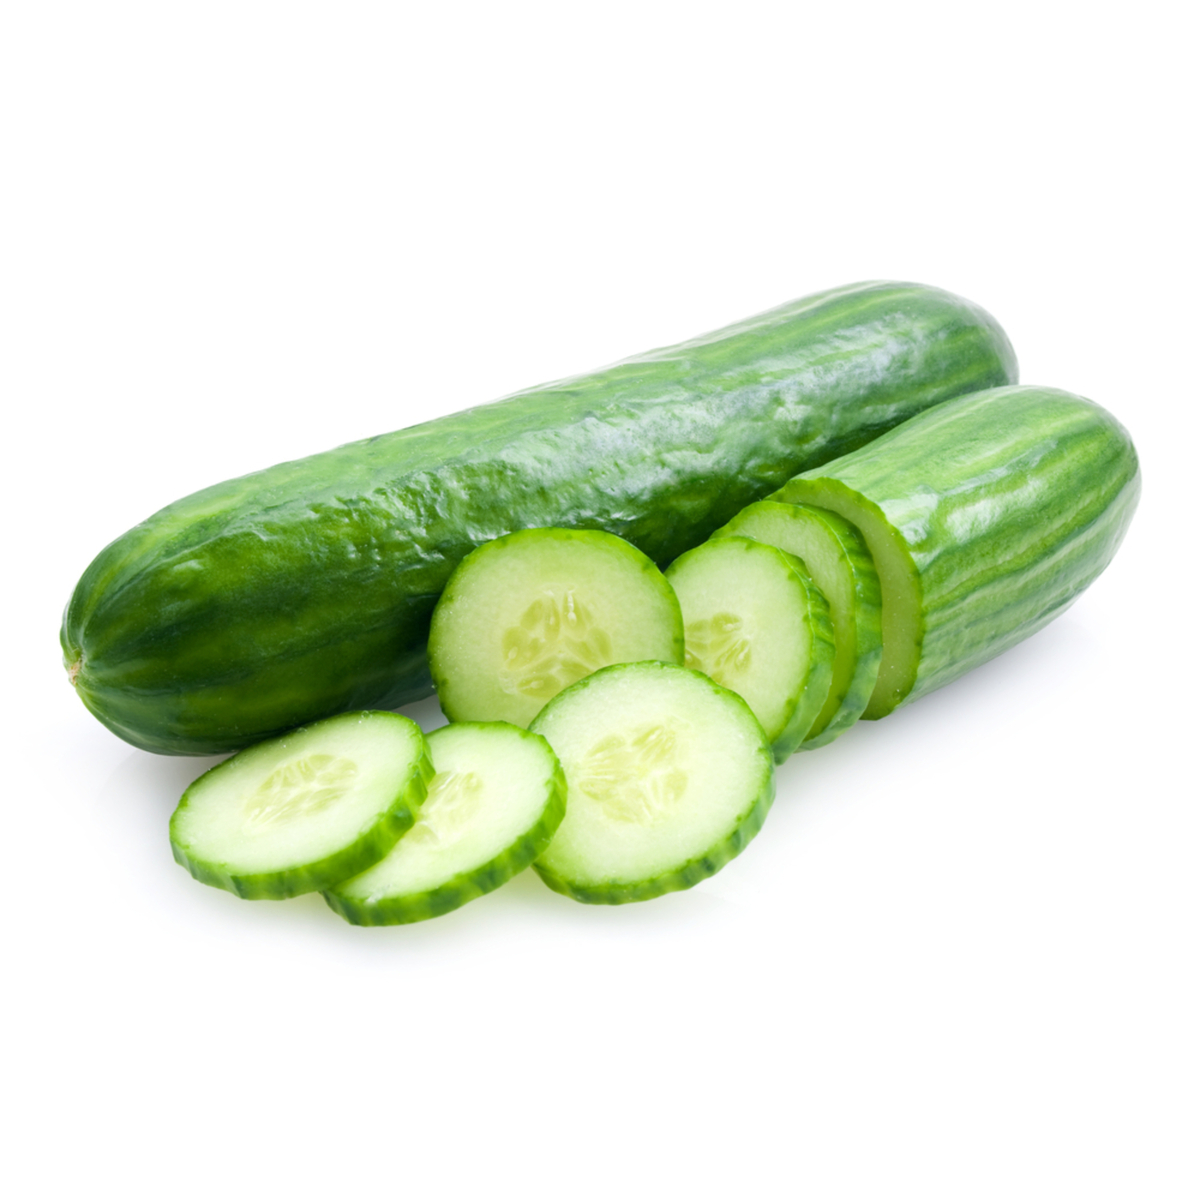 Cucumber Jordan 500g